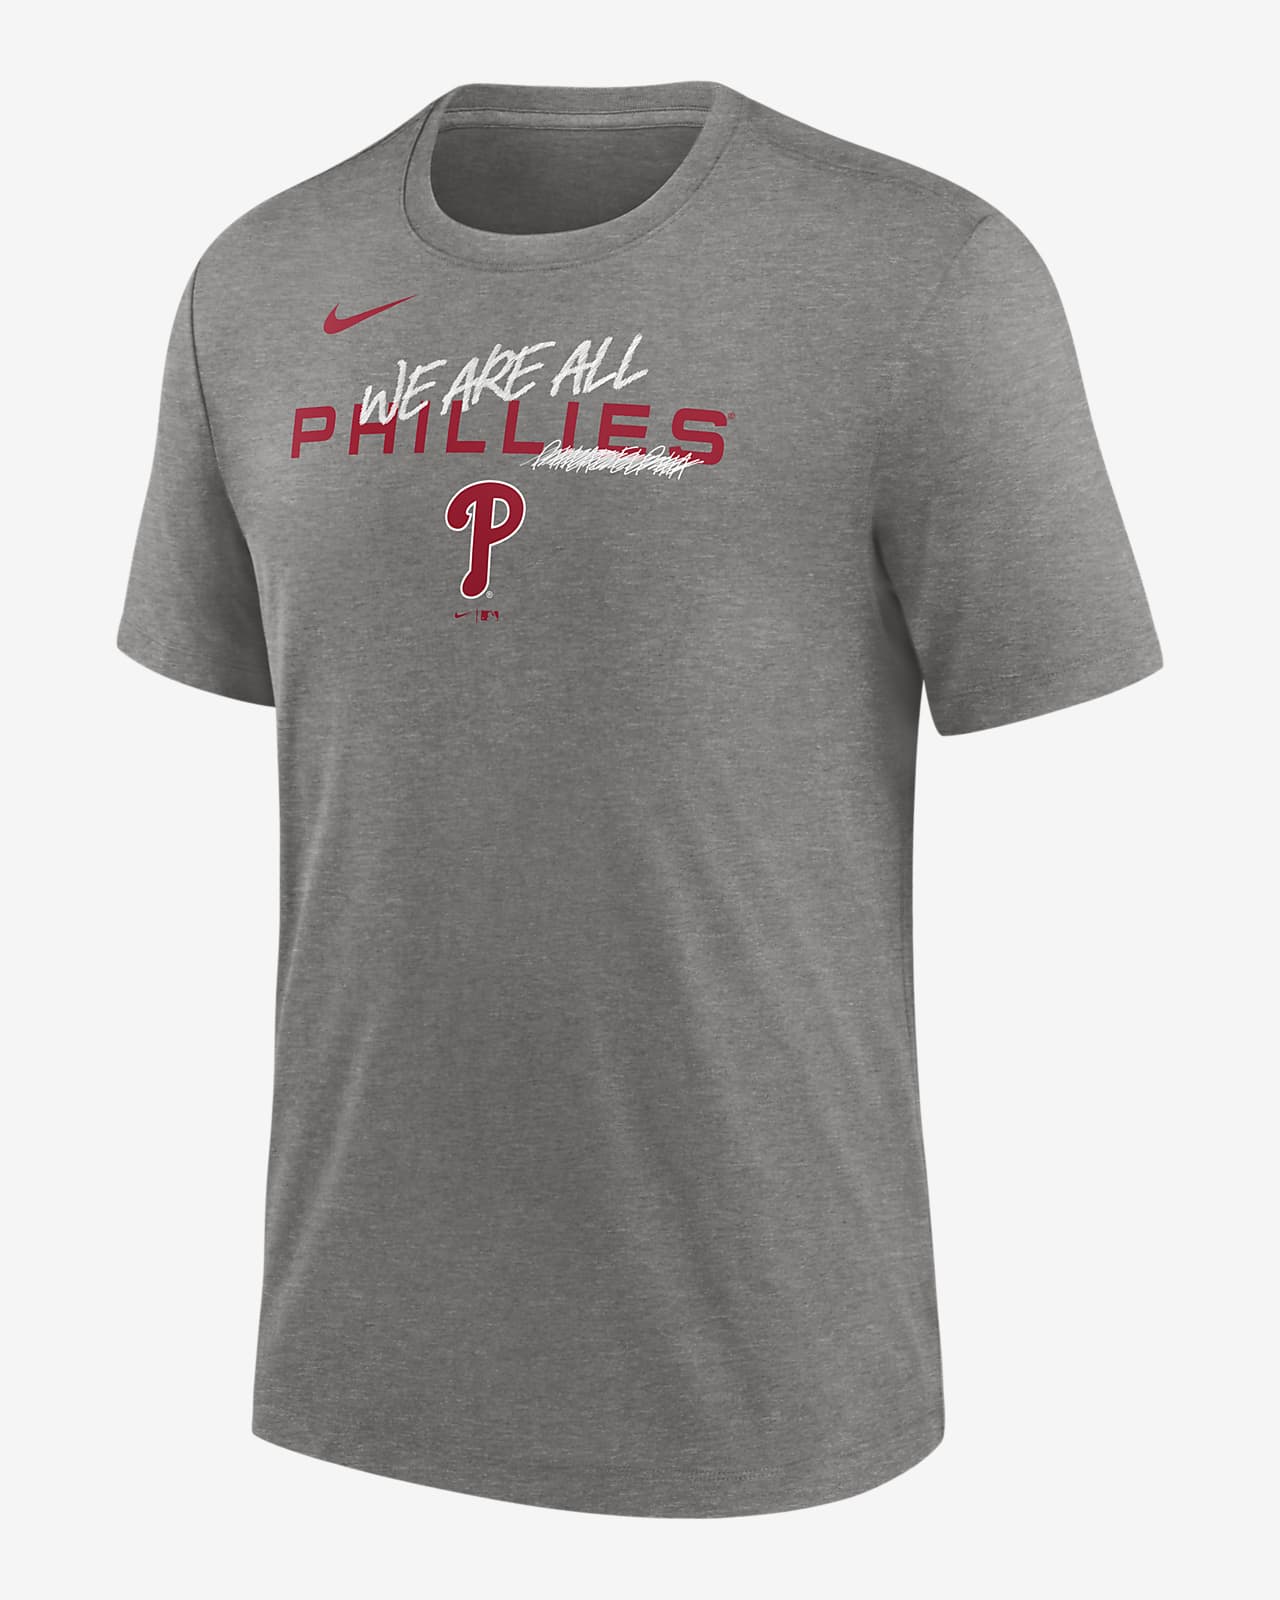 new phillies shirt